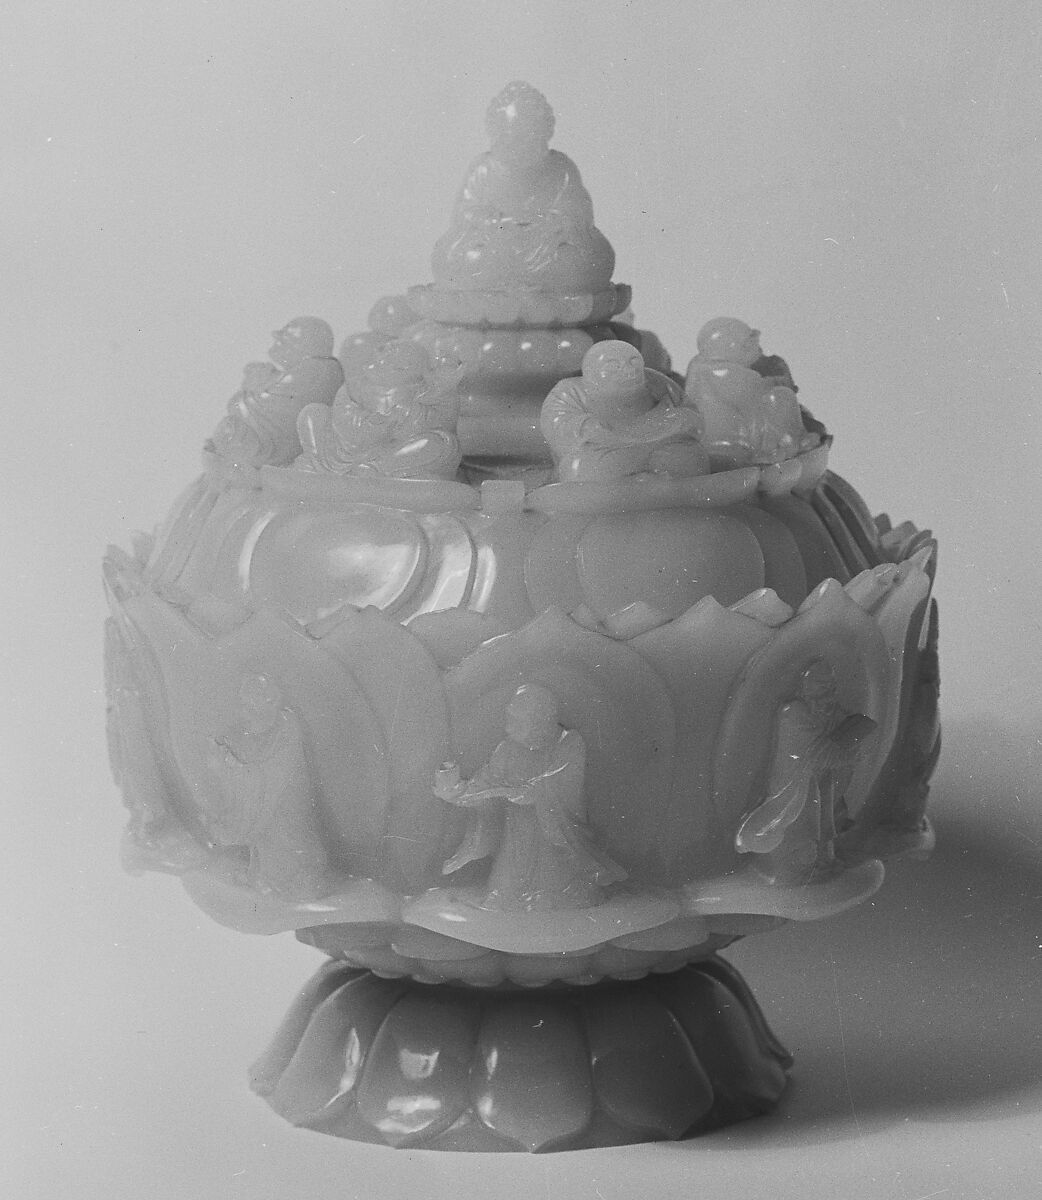 Lotus bowl with Buddha and arhats, Jade (nephrite), China 